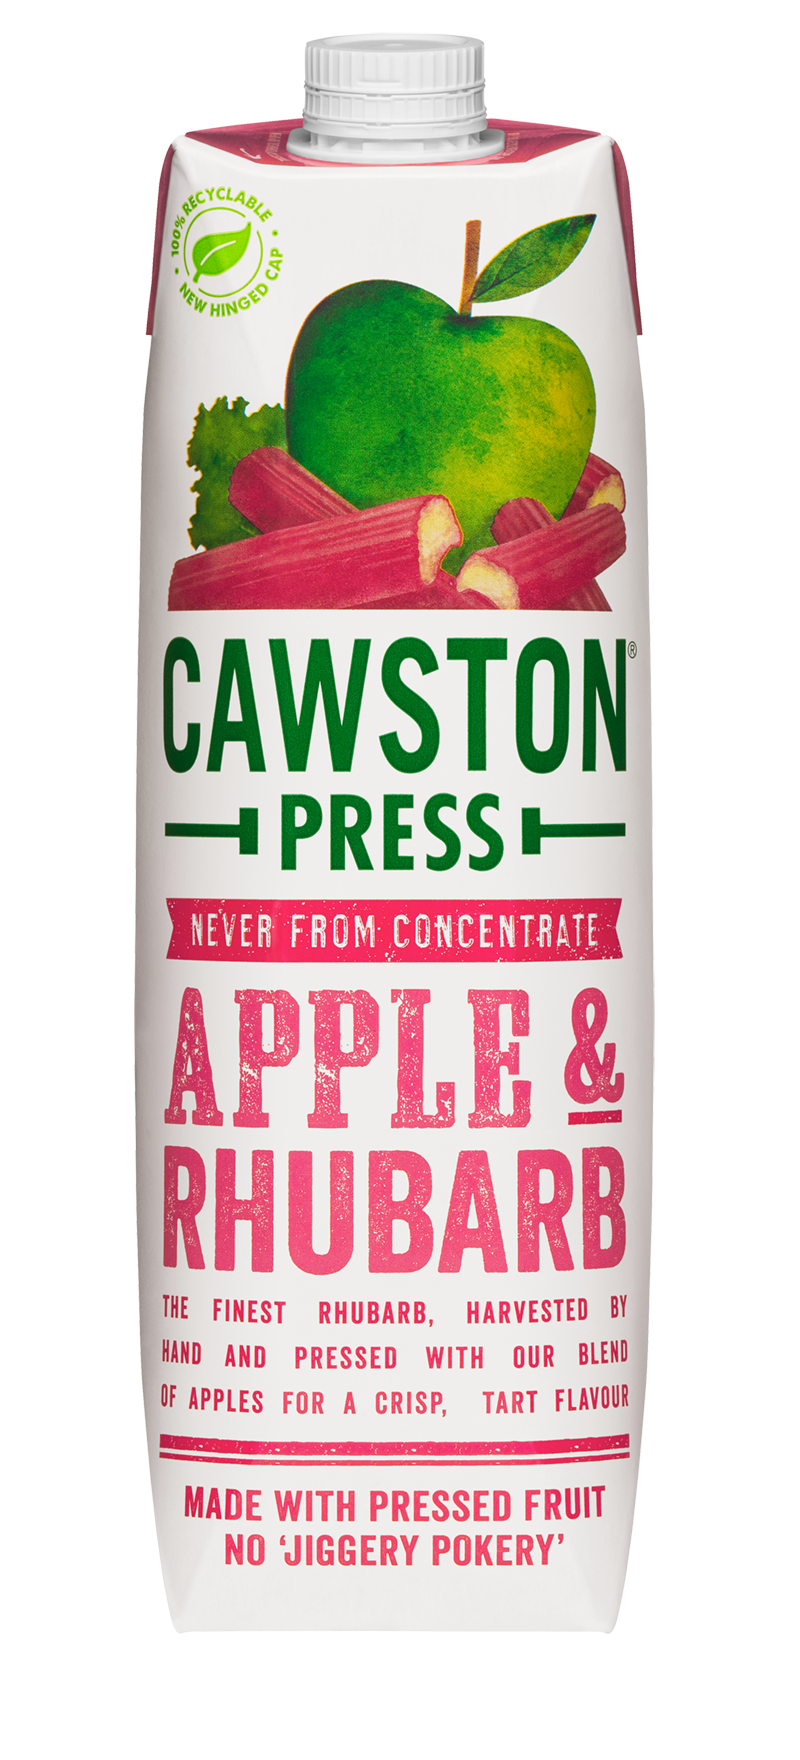 Apple & Rhubarb (6/12 pack)